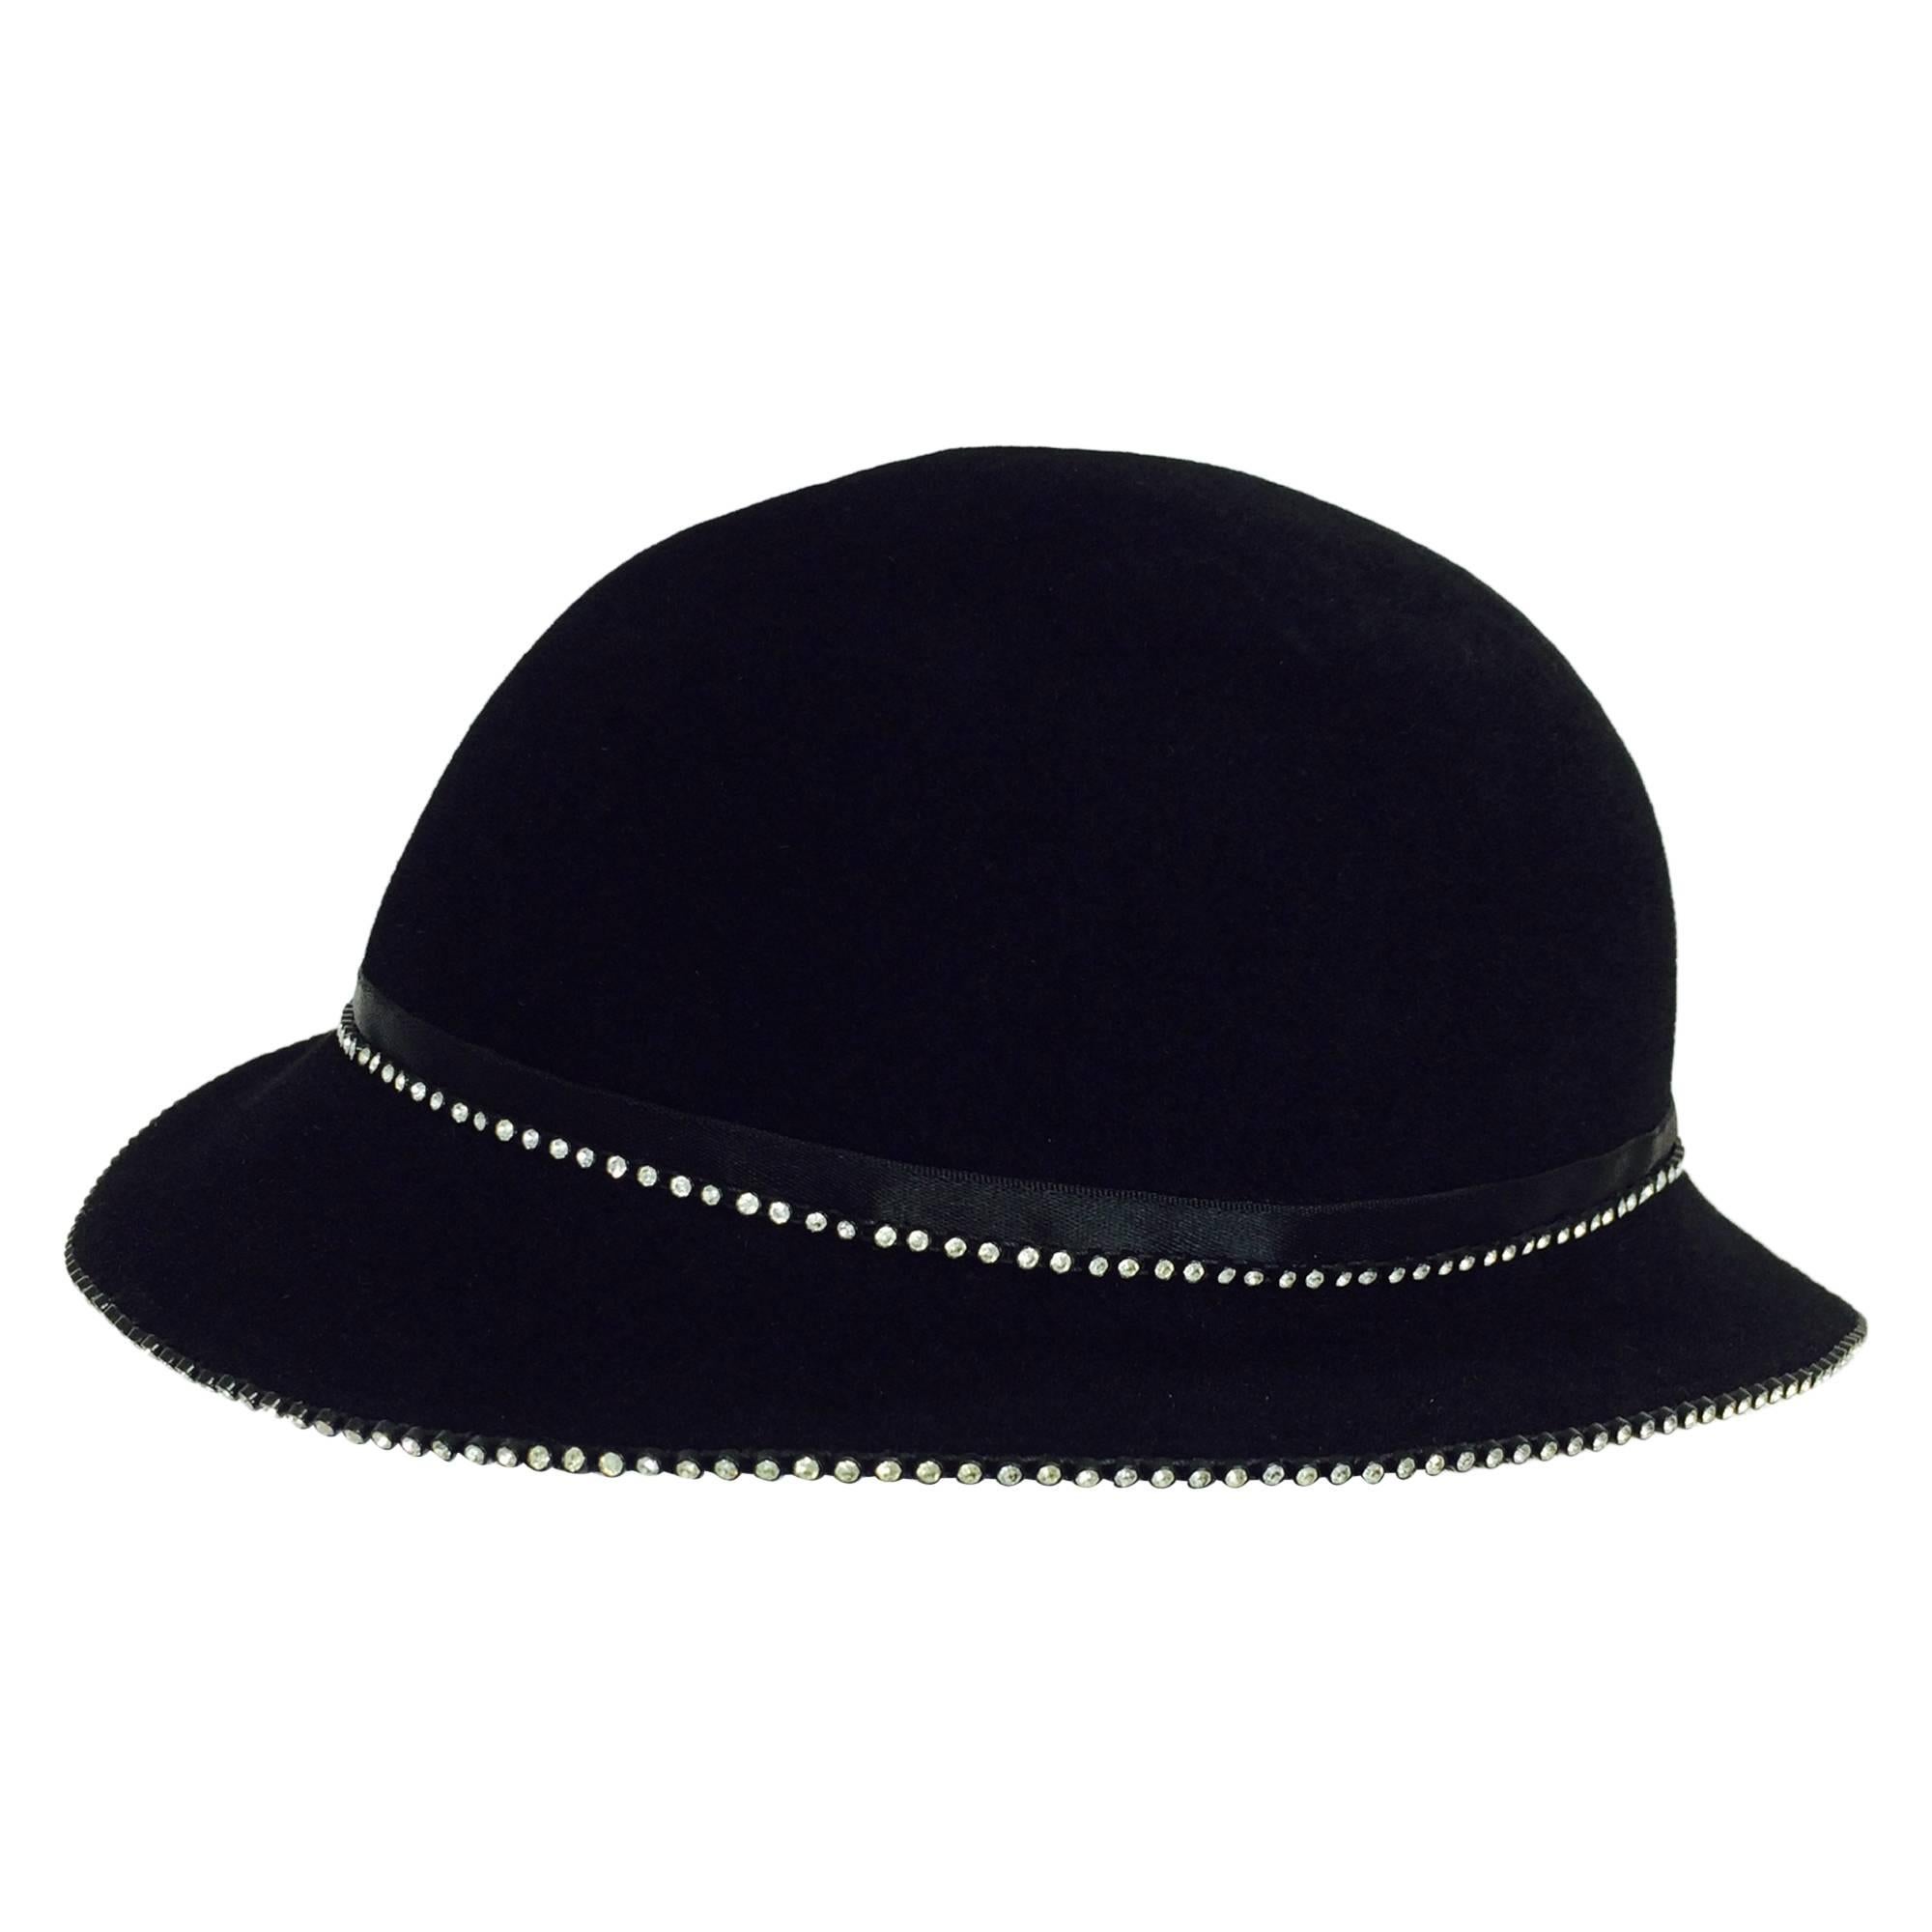 Galanos black fur felt hat with rhinestones 1960s